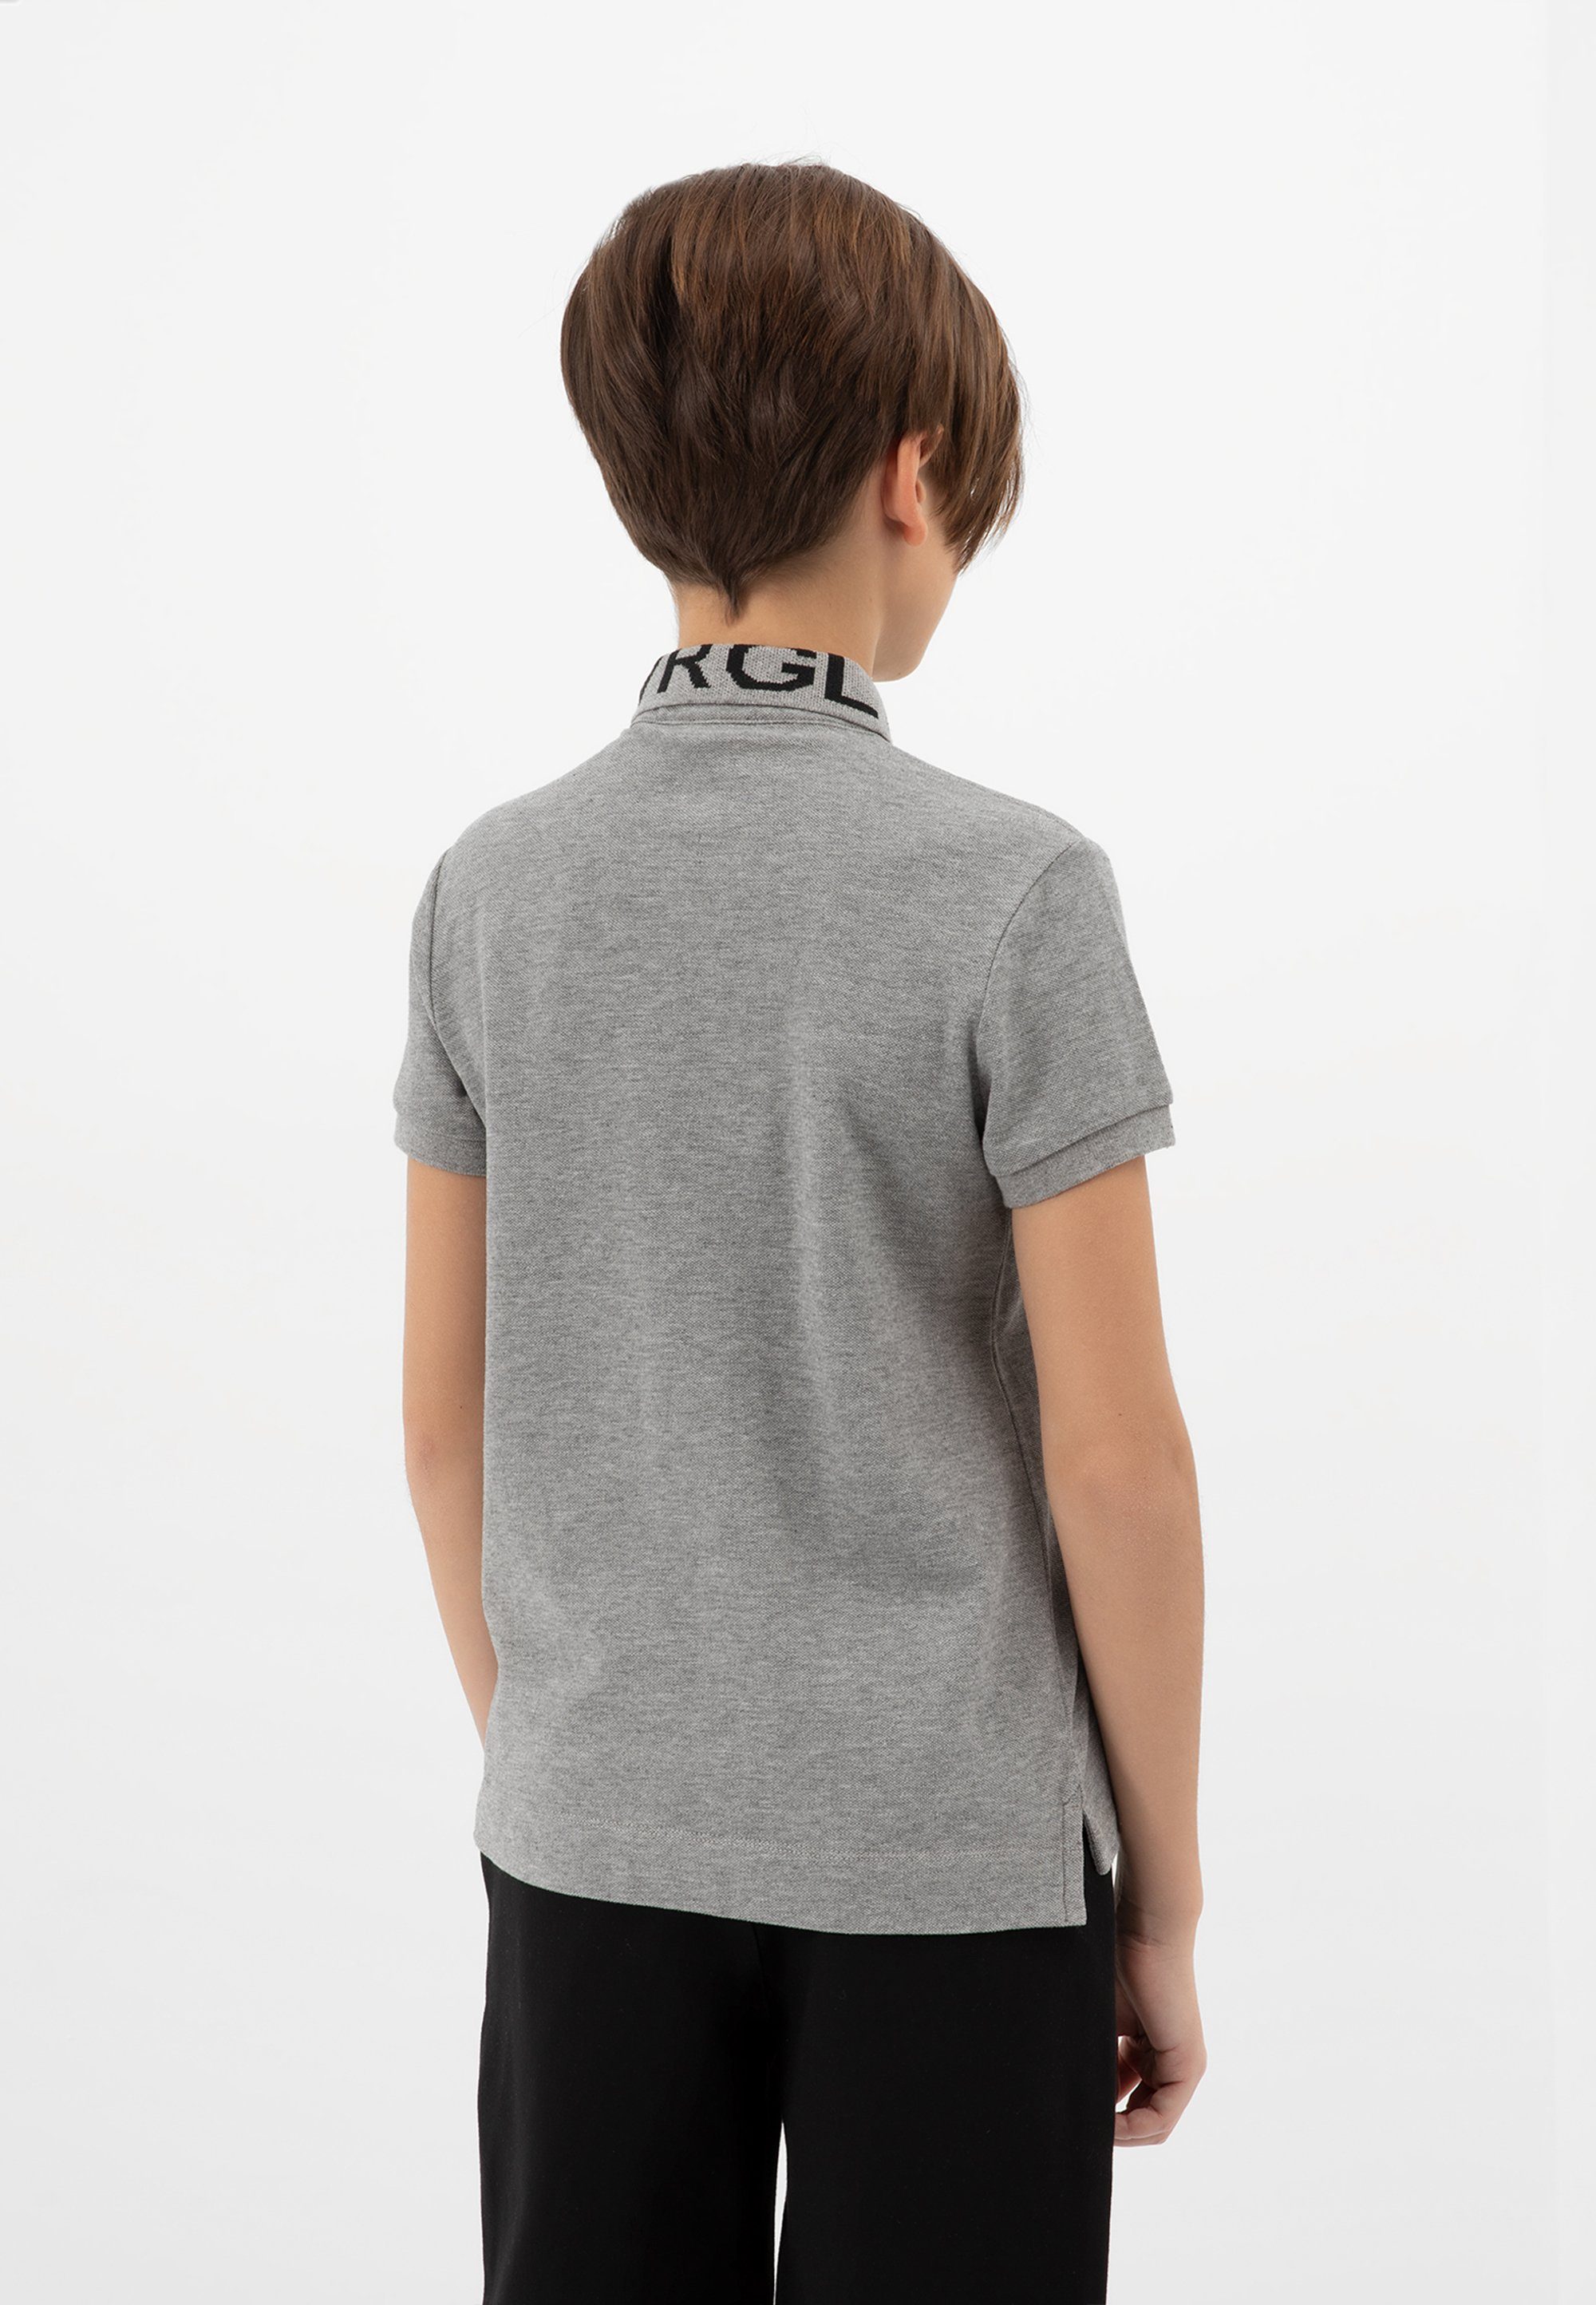 Gulliver Poloshirt mit kurzen Ärmeln, Ideal kombinierbar zu Stoffhosen,  Jeans oder Shorts